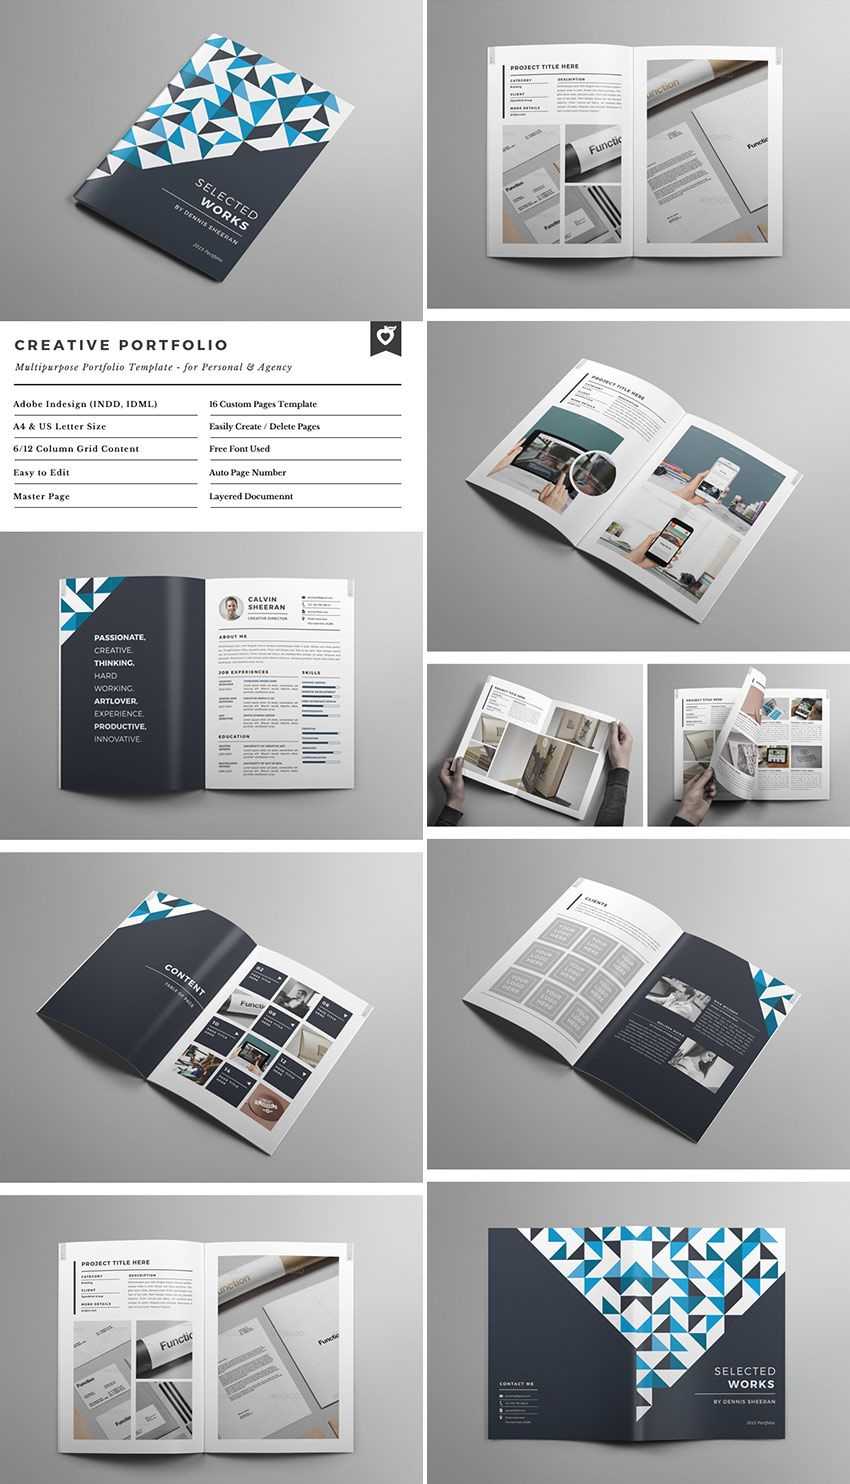 Creative Portfolio Brochure Indd | Indesign Brochure Throughout Adobe Indesign Brochure Templates